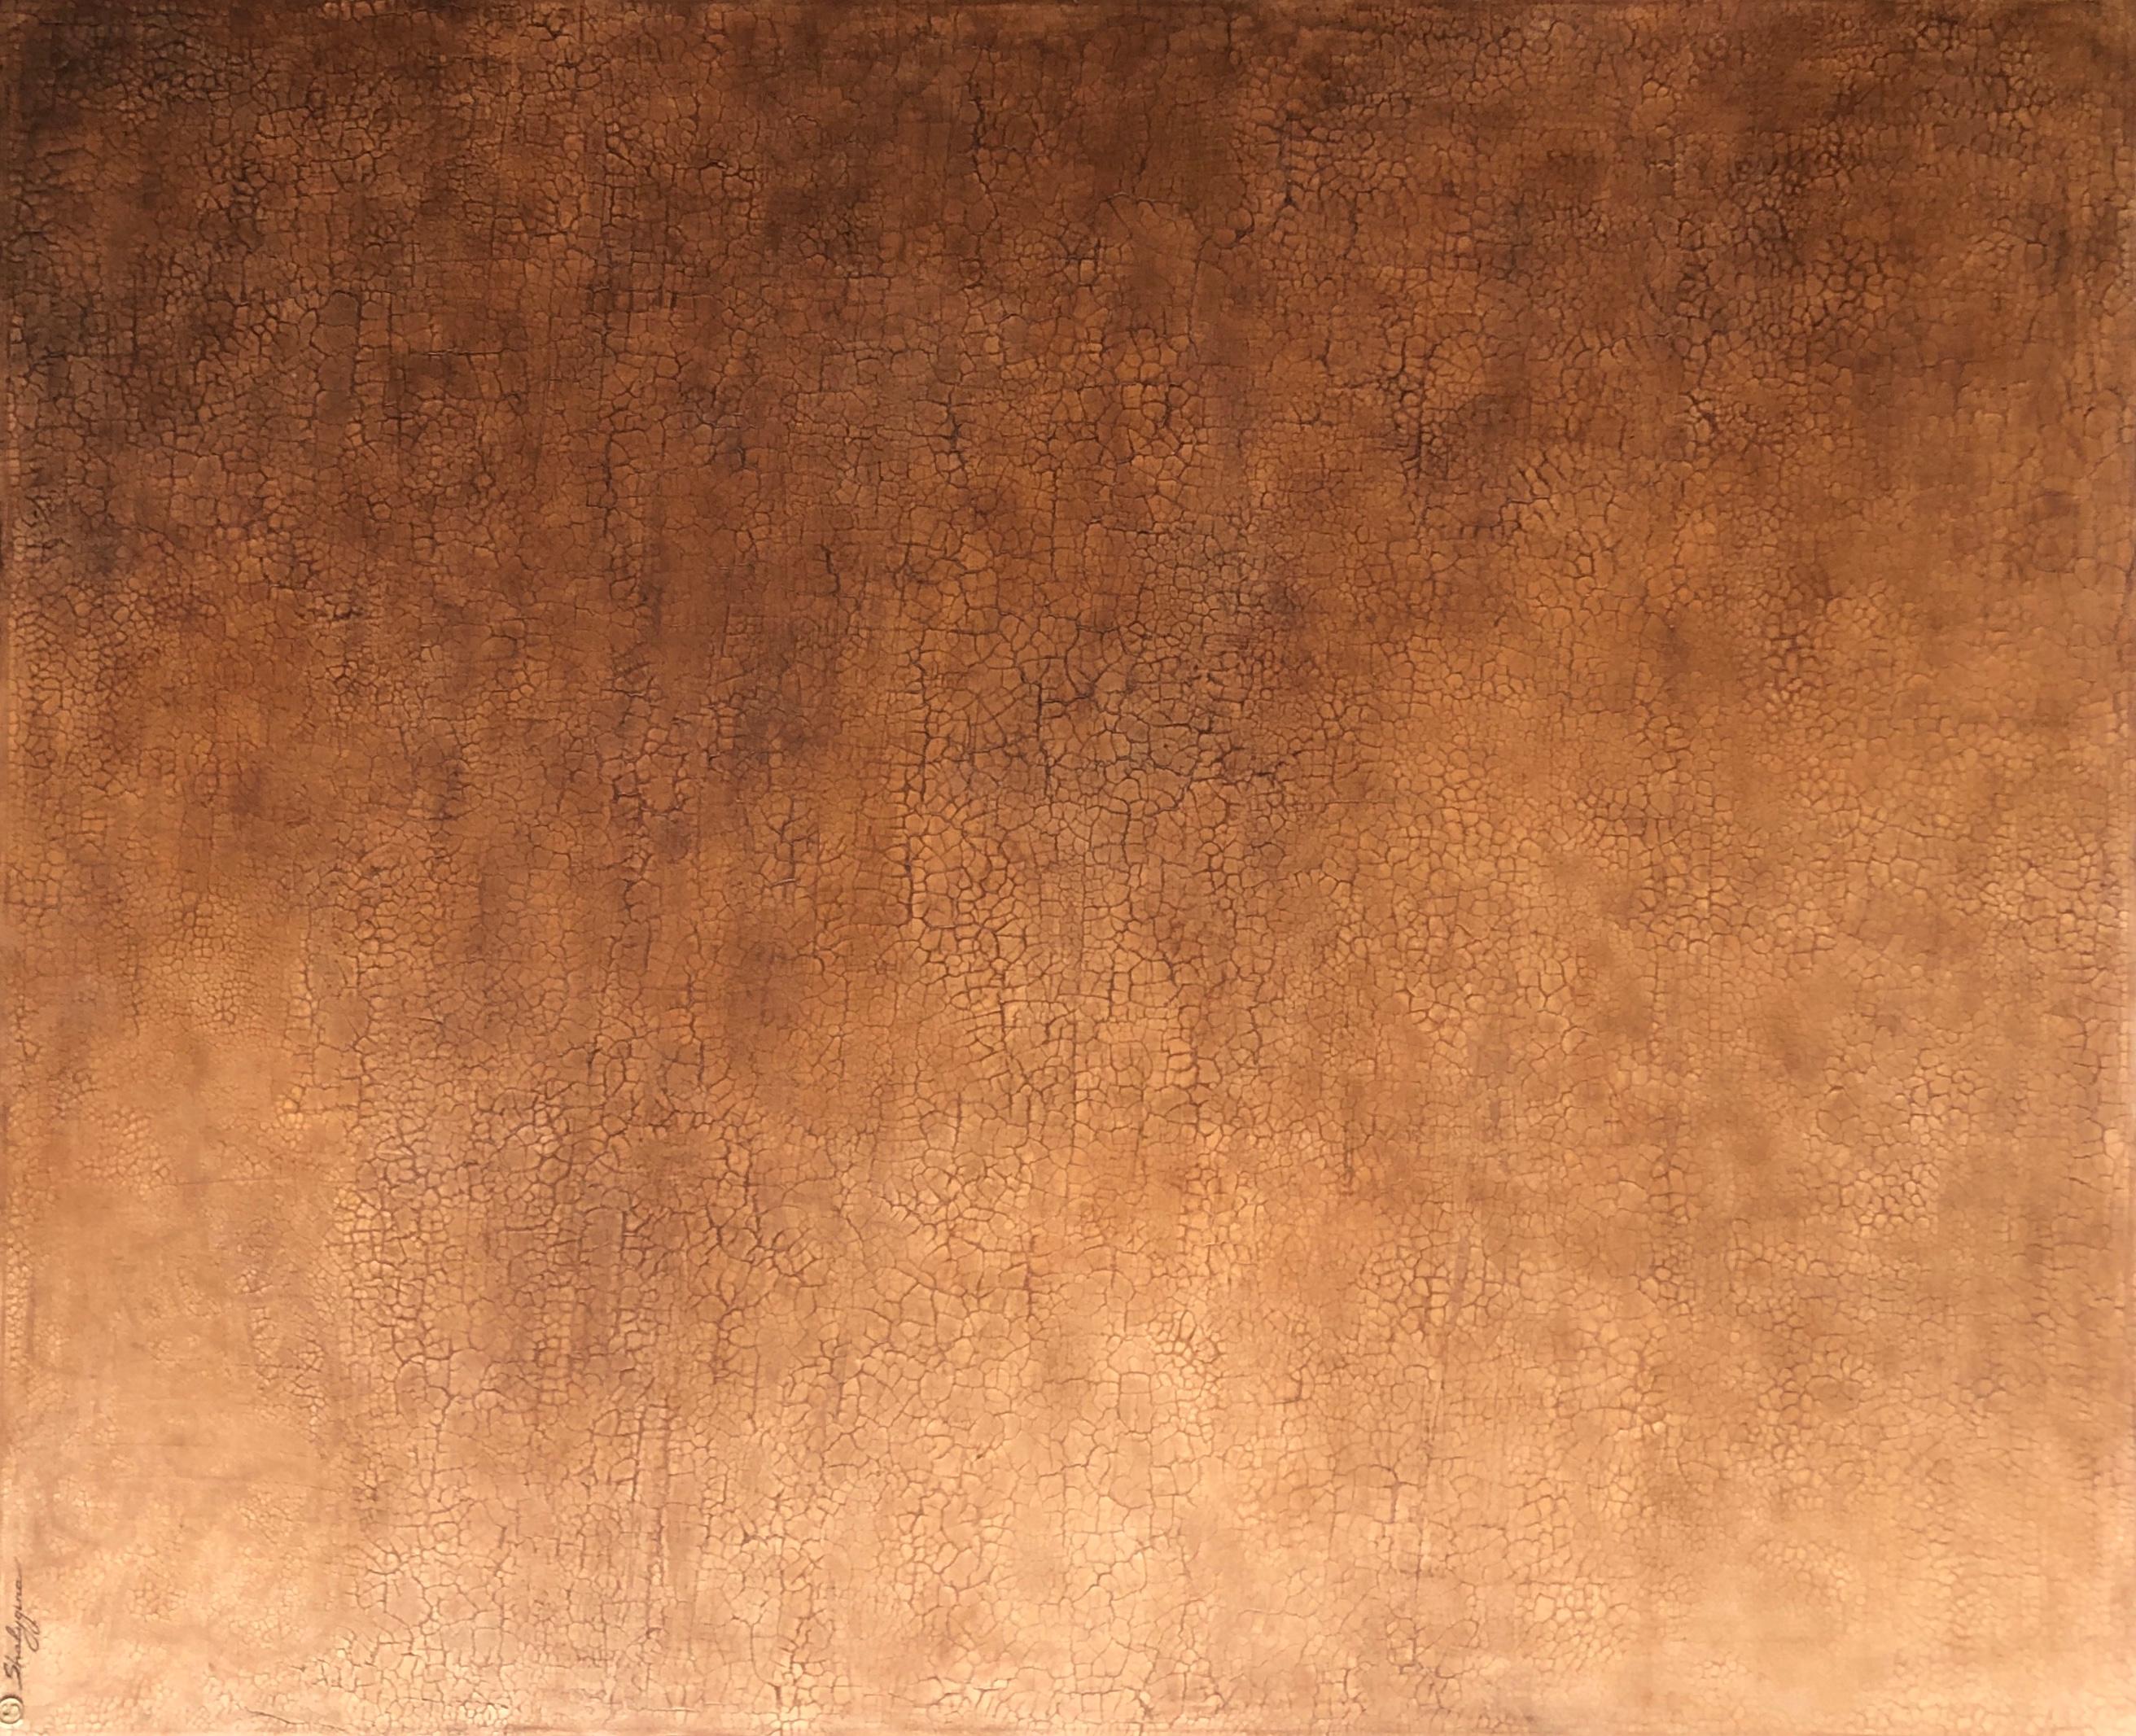 Burnt Orange Minimalist Monochrome Textured Contemporary Abstract Painting 59x72